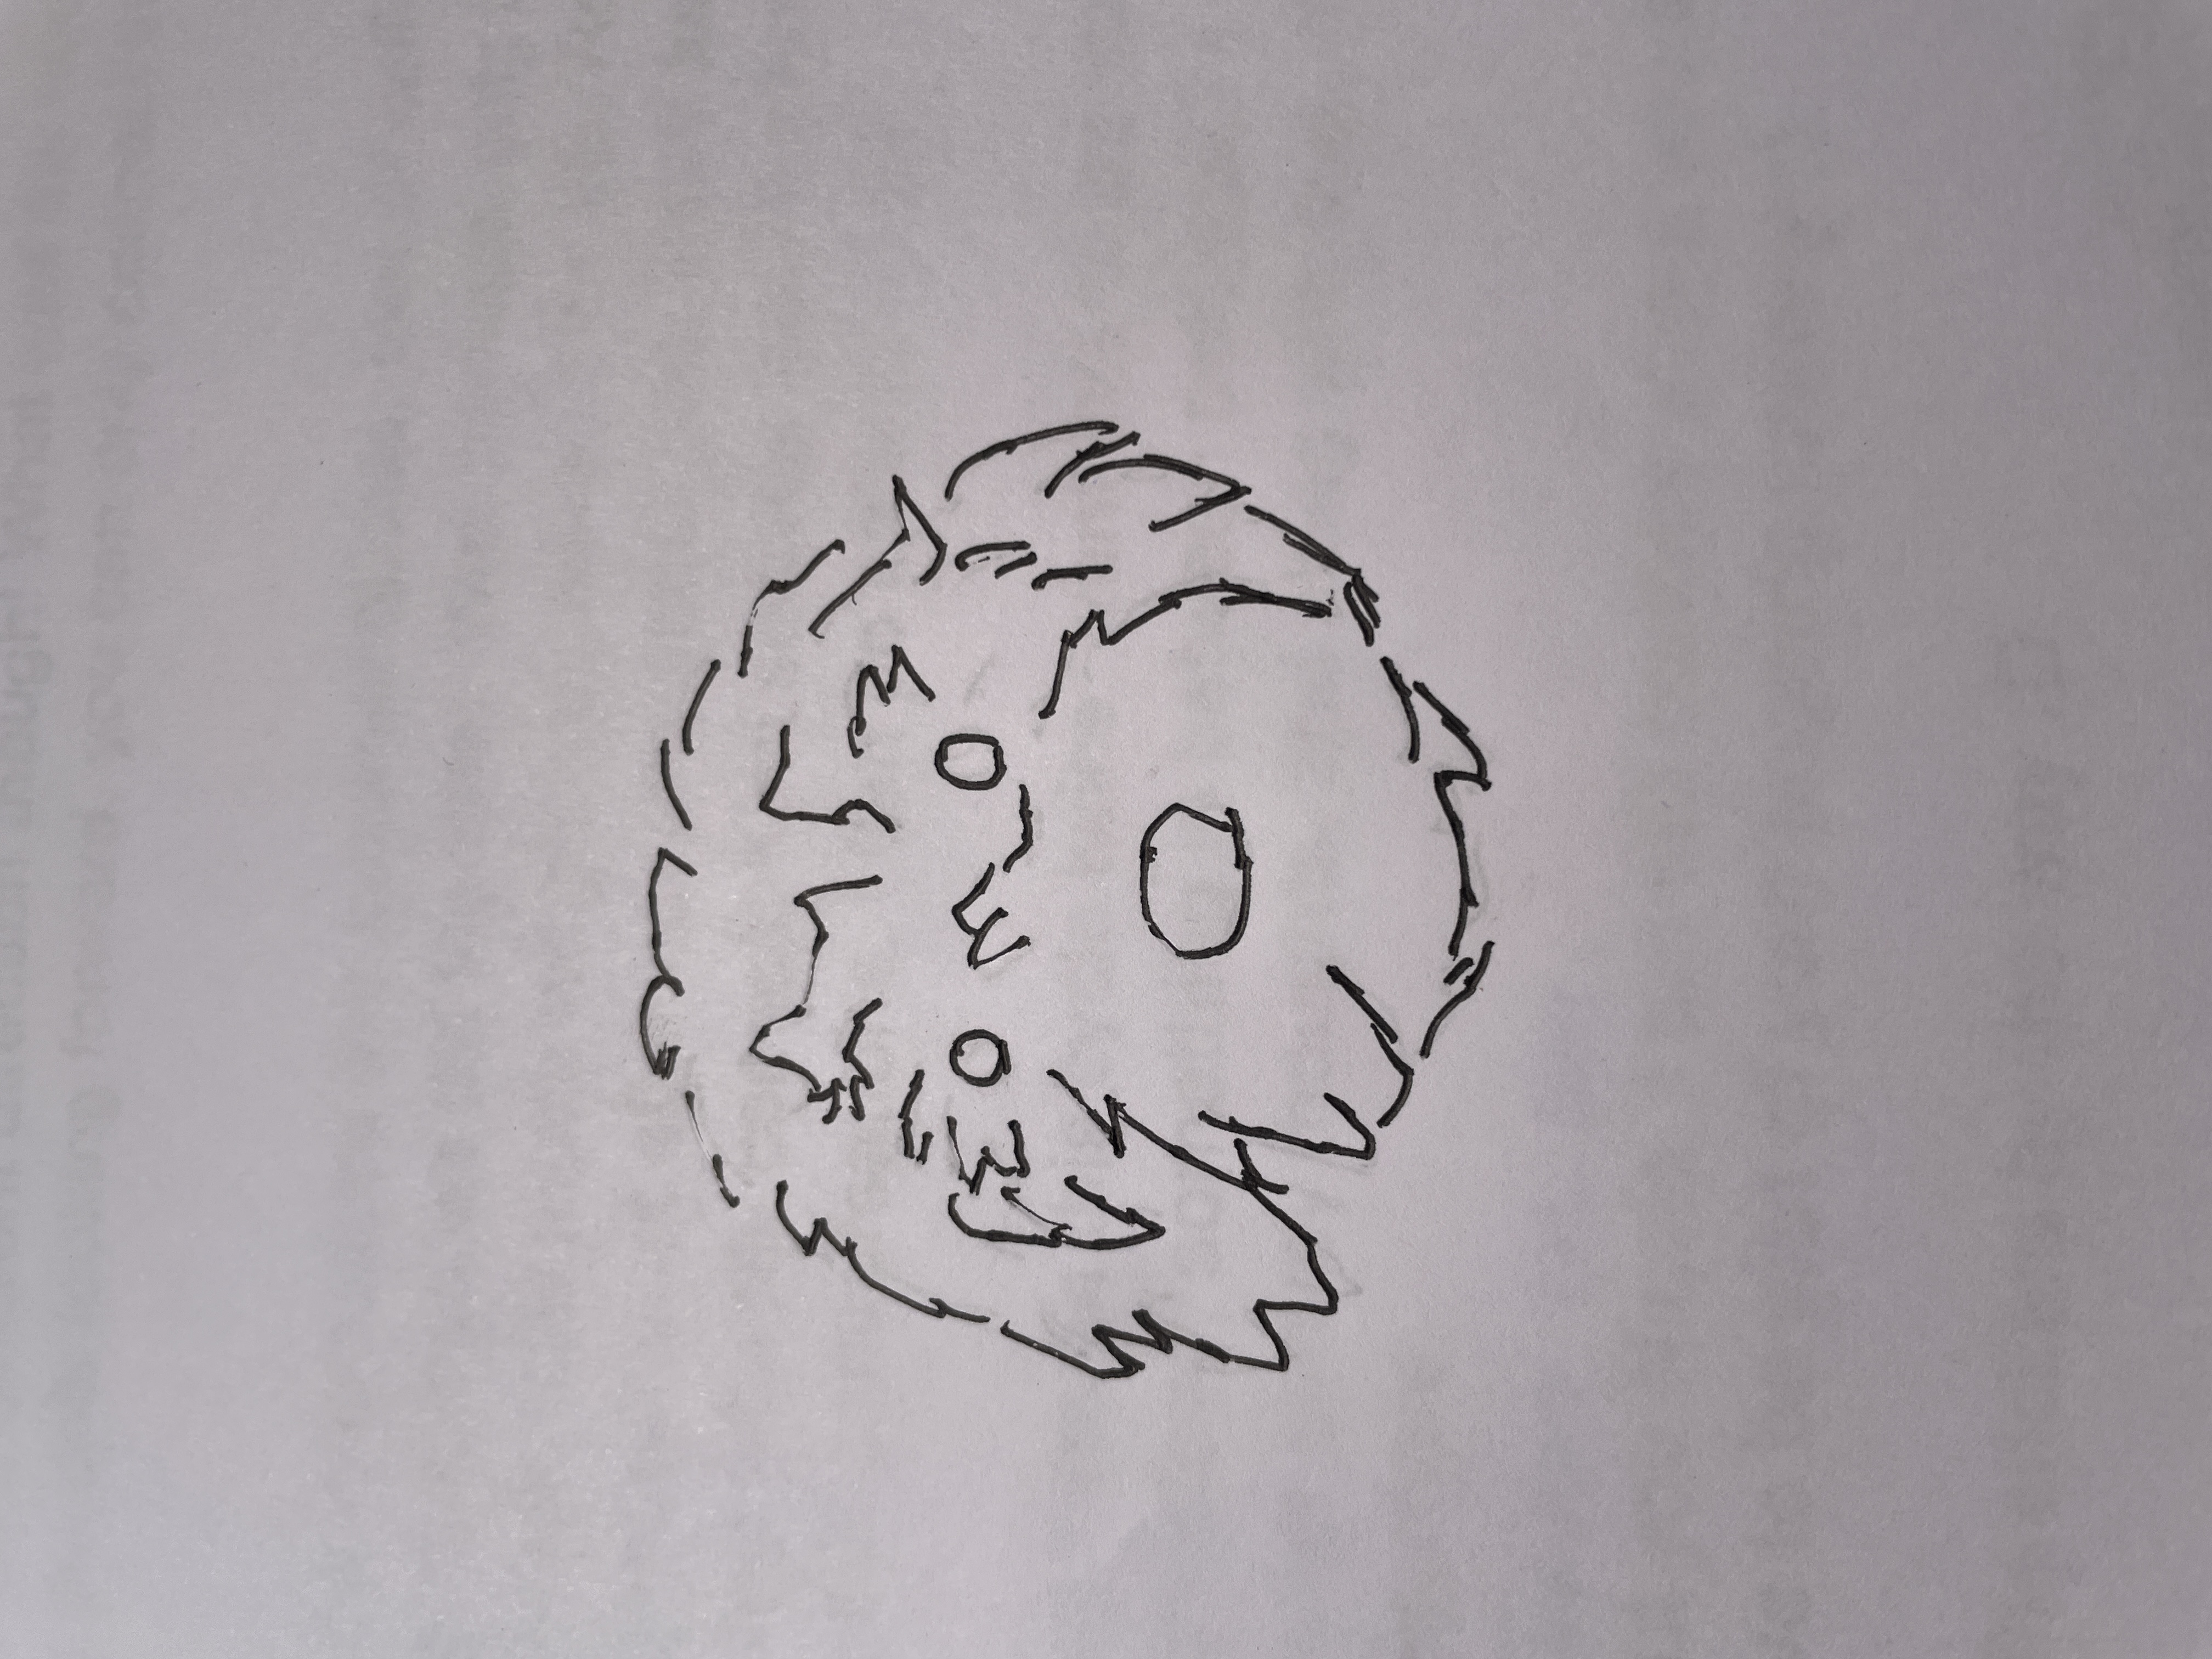 Placeholder, doodle for a friend’s goldendoodle